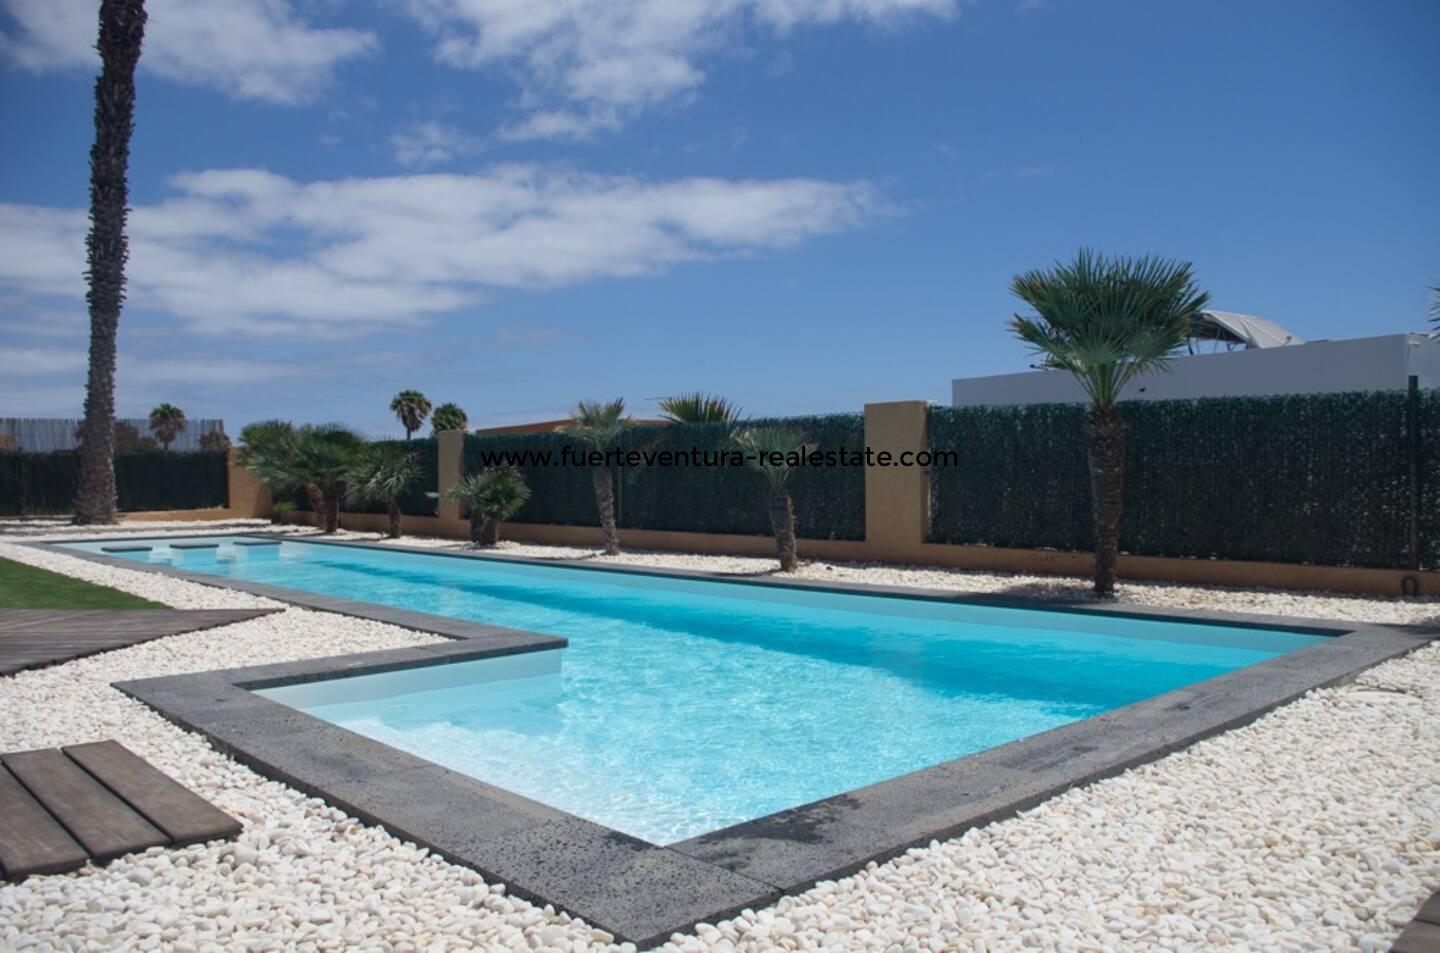  Villa unica con piscina sul Golf Las Salinas a Caleta de Fuste